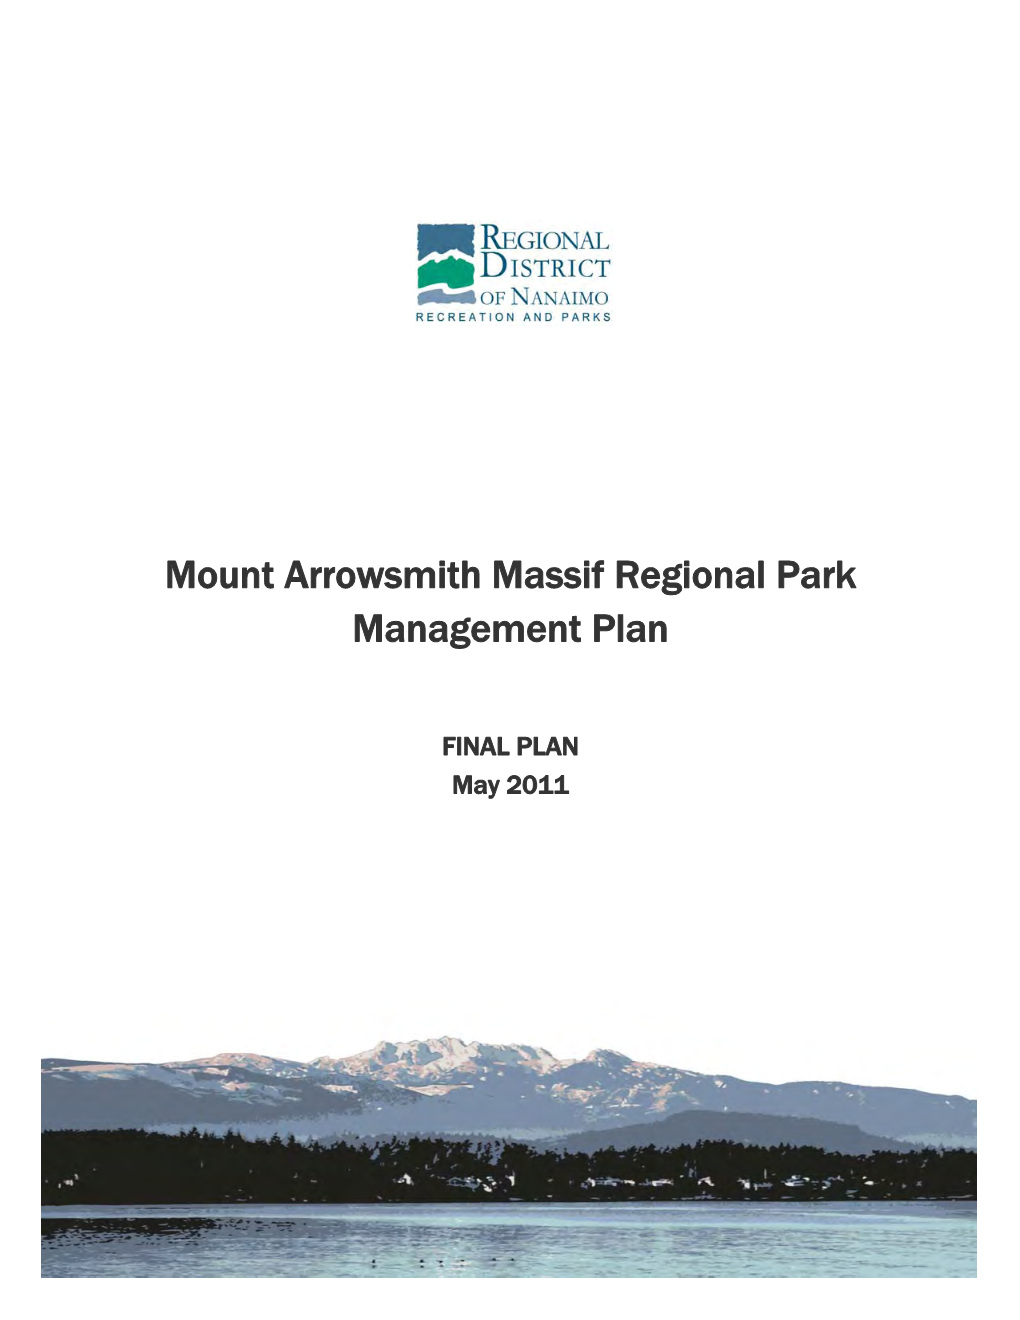 Mount Arrowsmith Massif Regional Park Management Plan